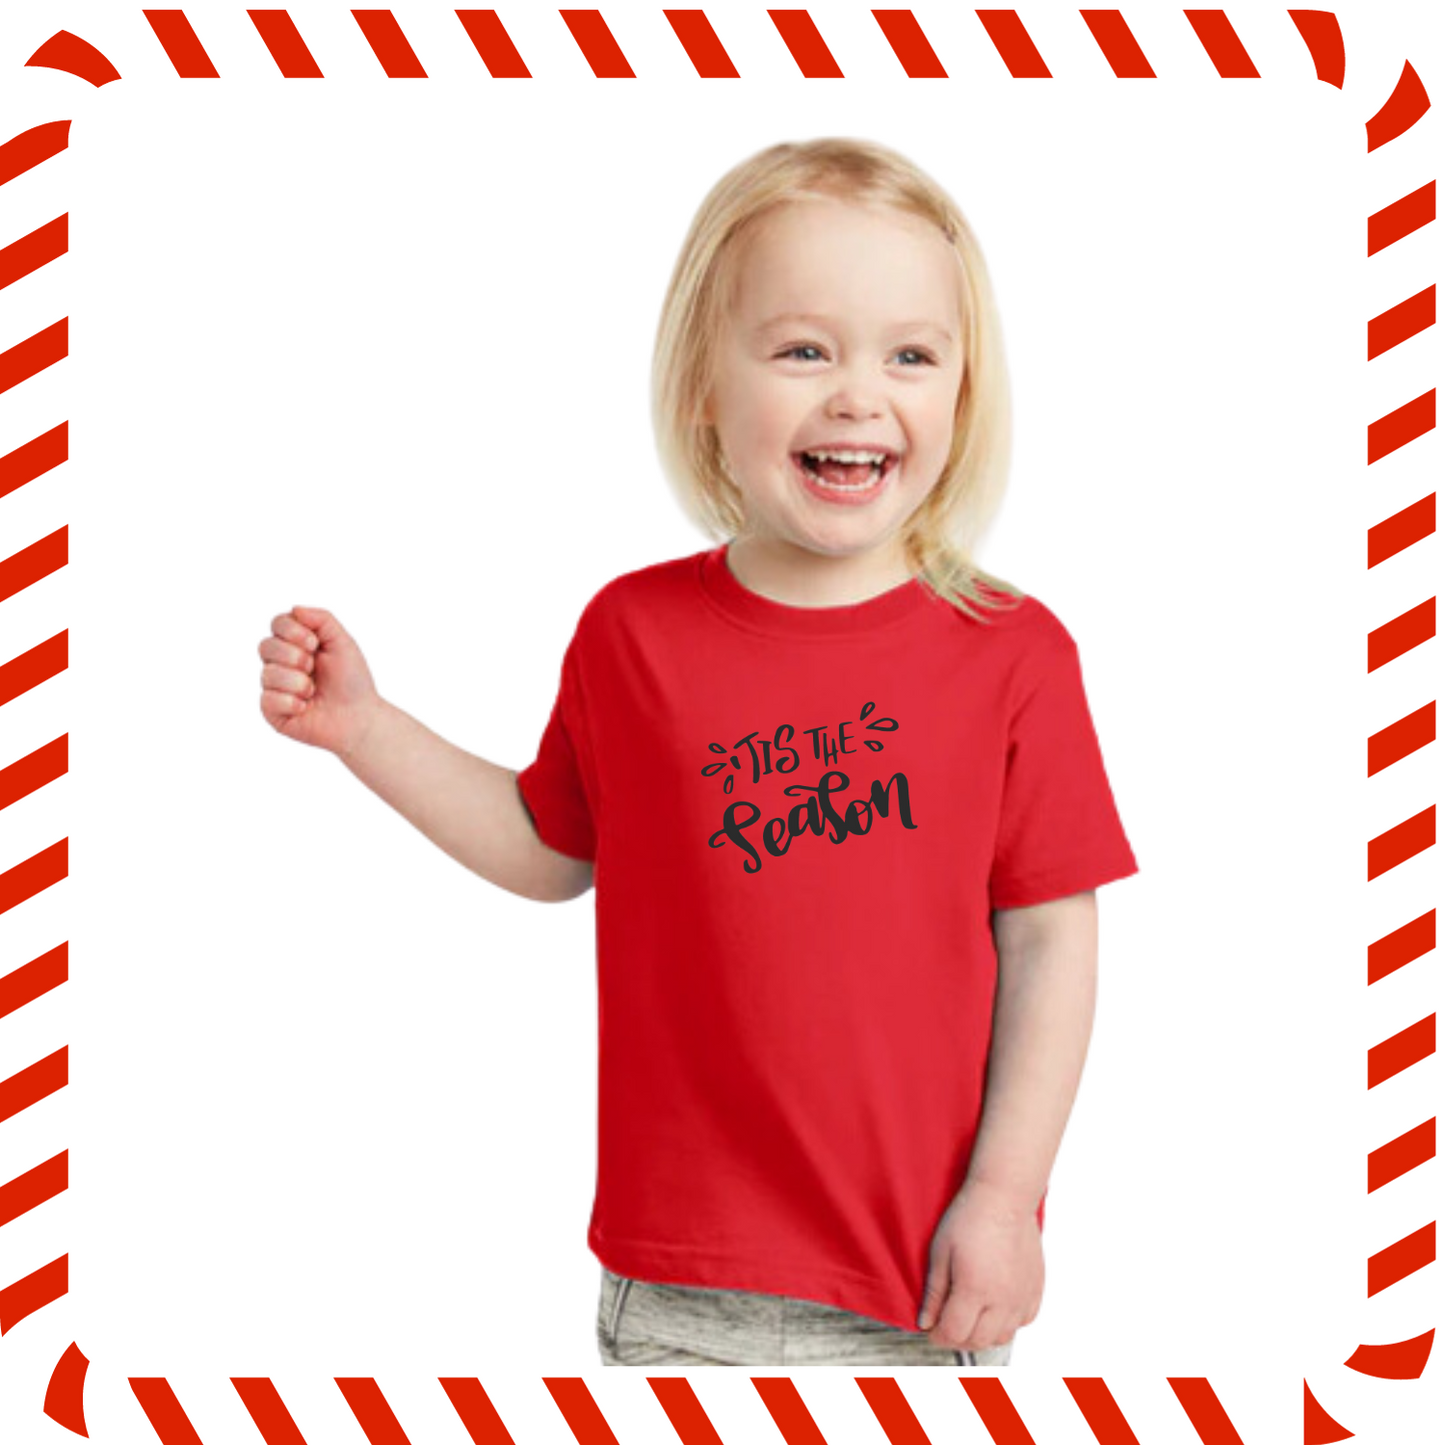 'Tis The Season Shirts - Toddler/Infant